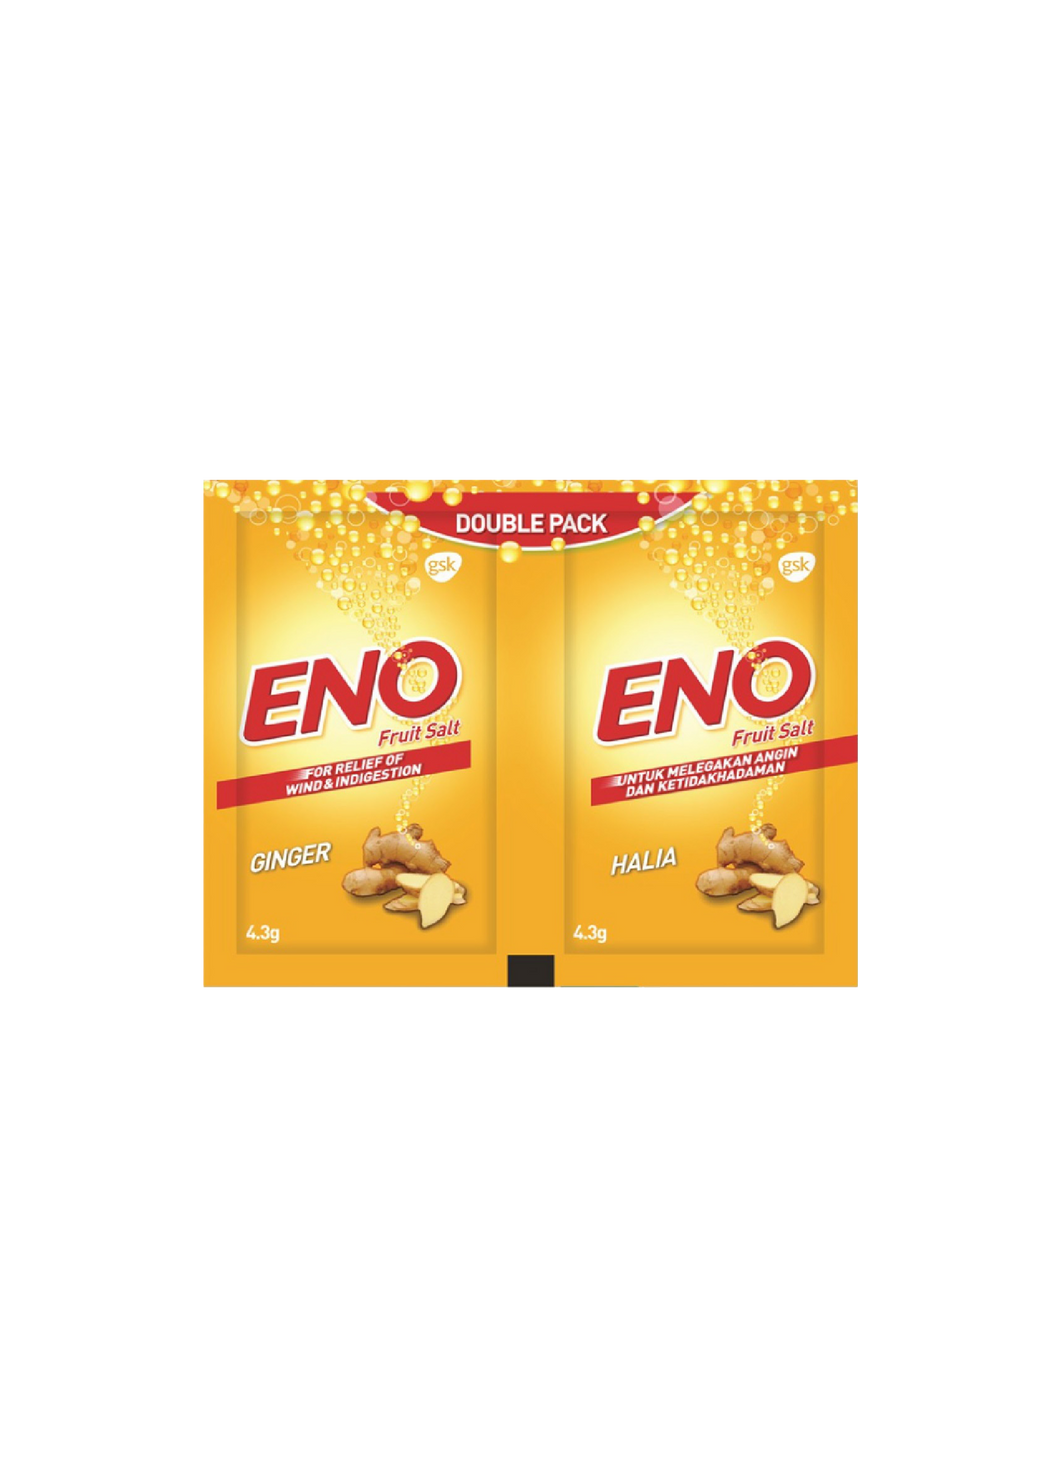 ENO Fruit Salt Ginger Flavour Double Pack (4.3g x 2)